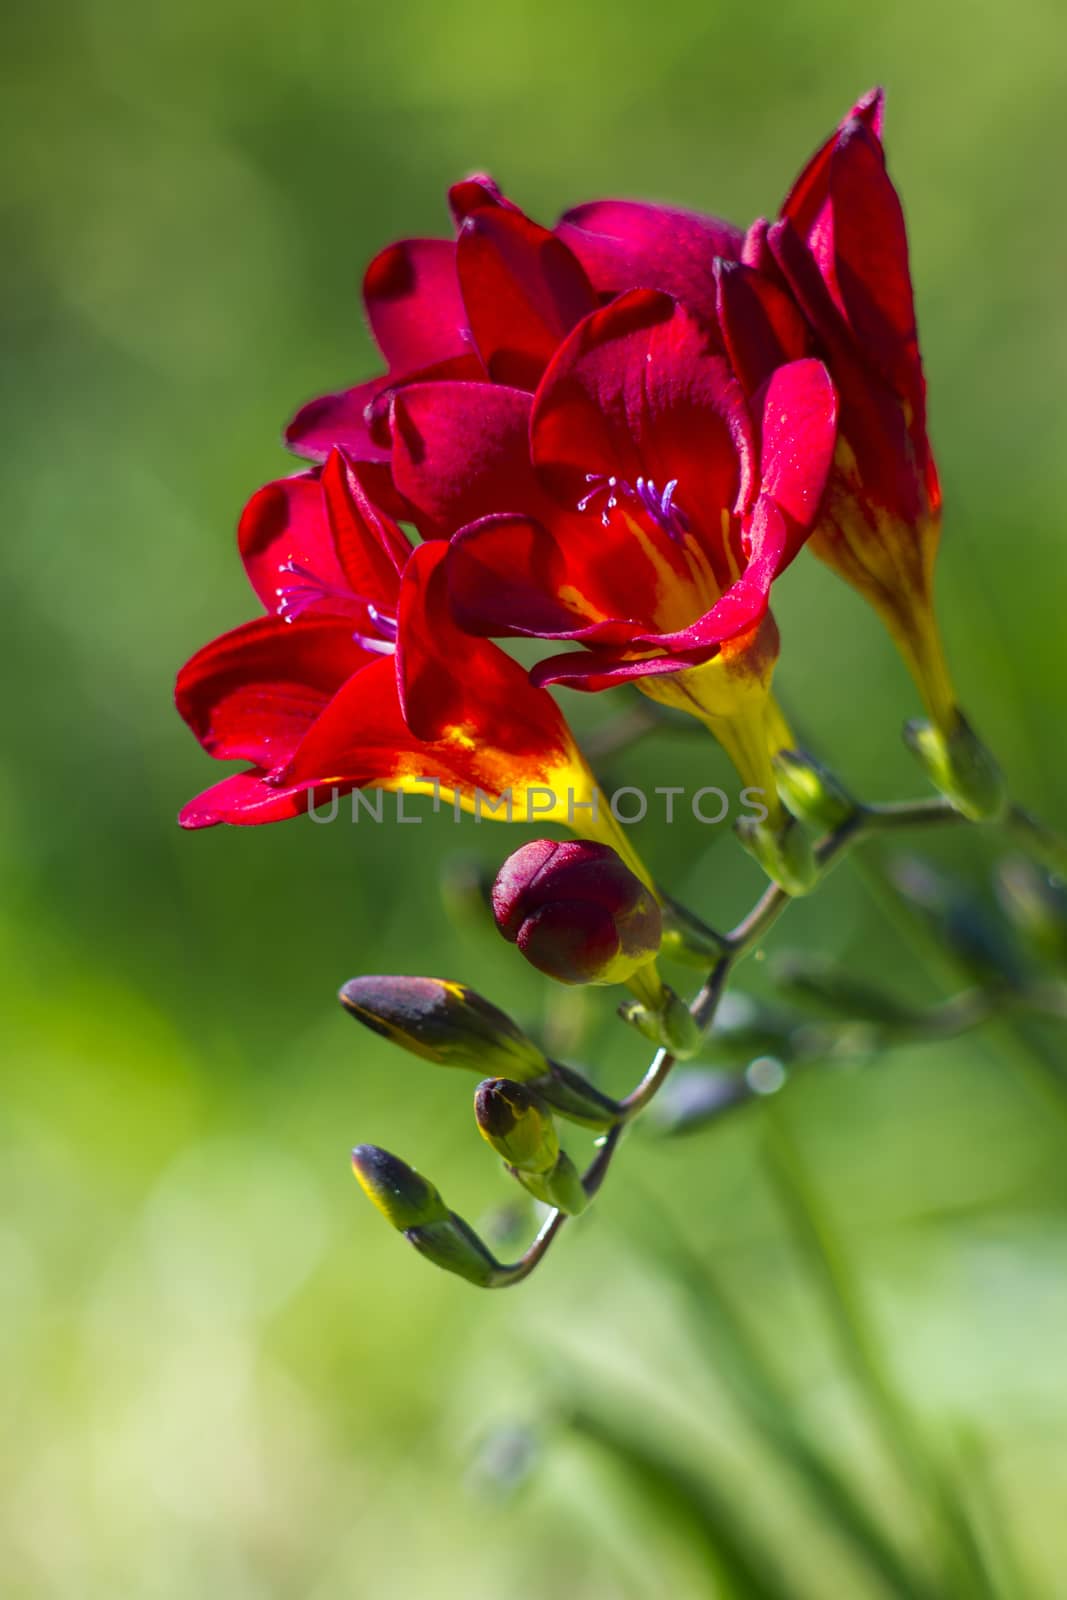 red freesia in the garden by miradrozdowski